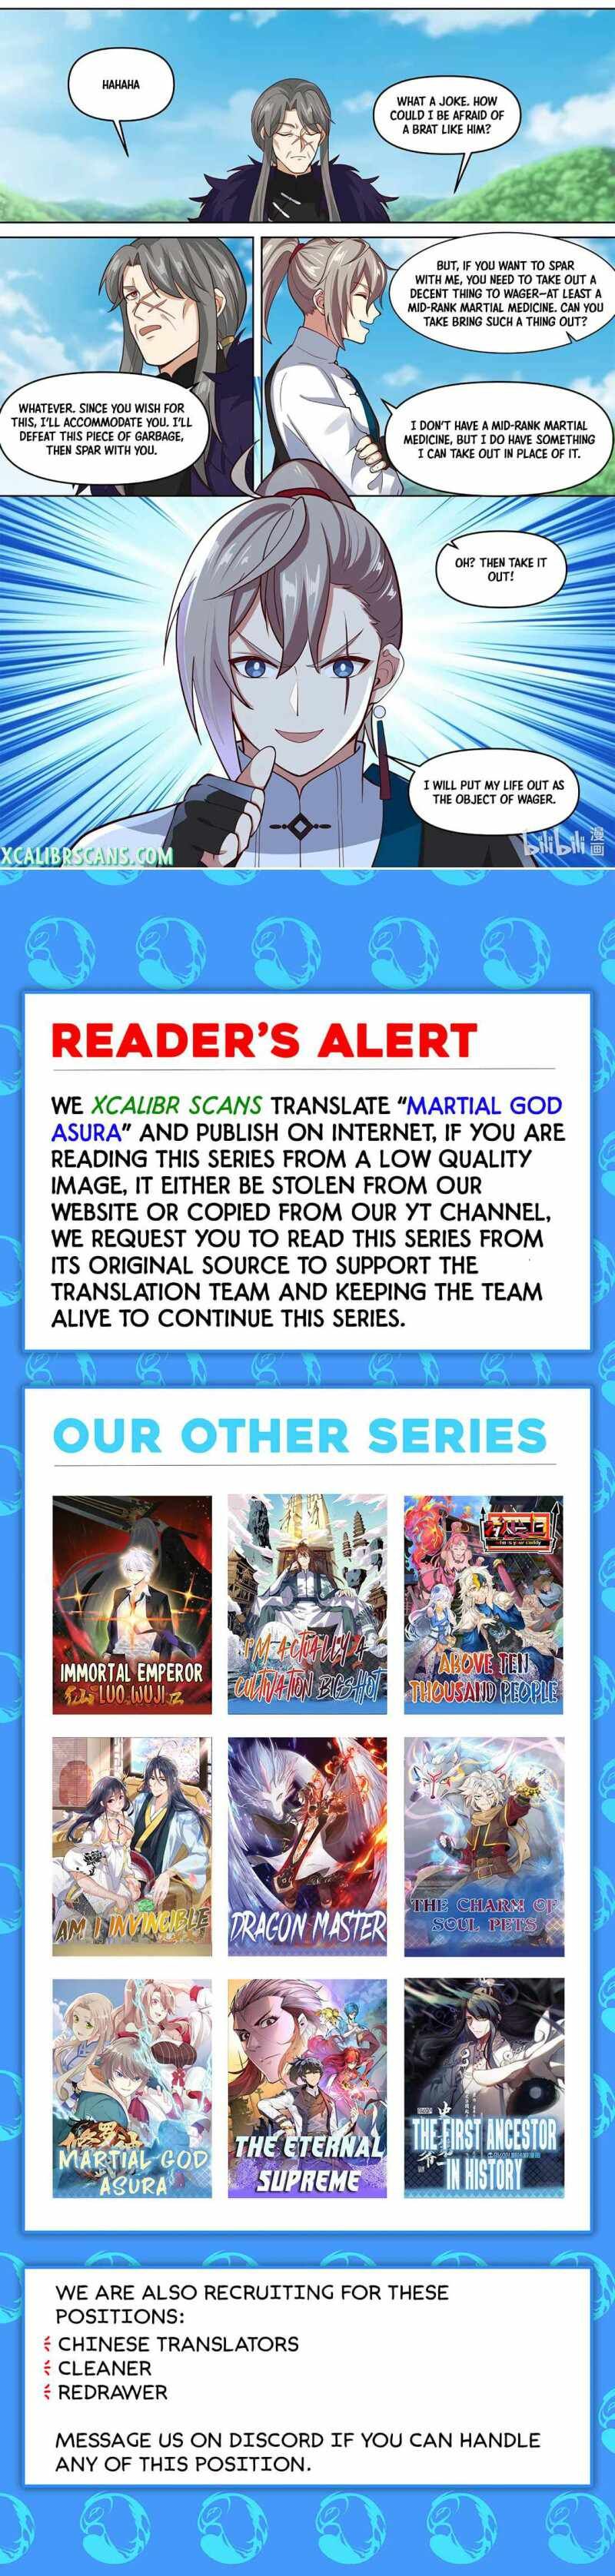 Martial God Asura Chapter 438 - Page 10